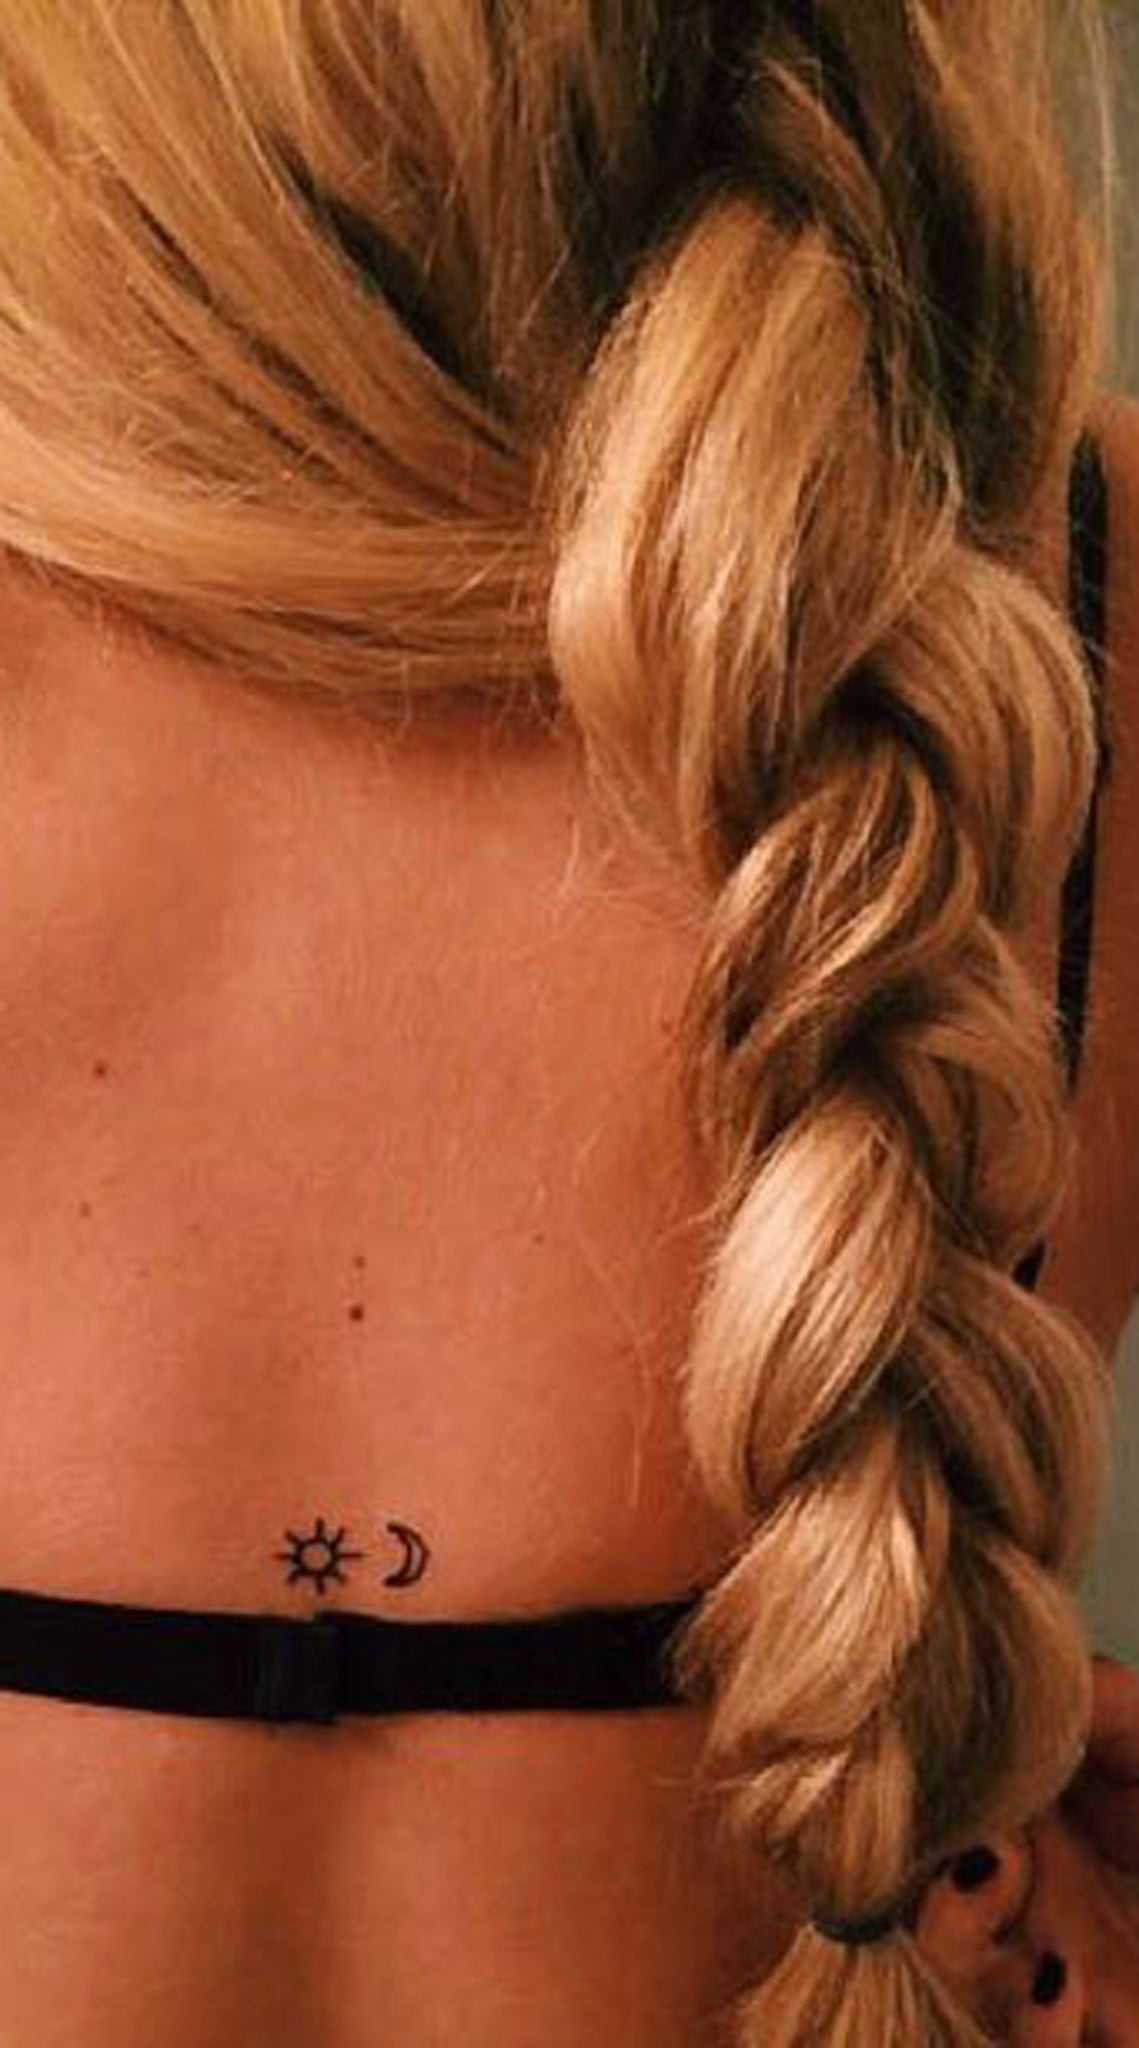 Tiny Sun and Moon Back Tattoo Ideas for Teenagers -  Pequeñas ideas de tatuajes para el sol y la luna para adolescentes - www.MyBodiArt.com #tattoos